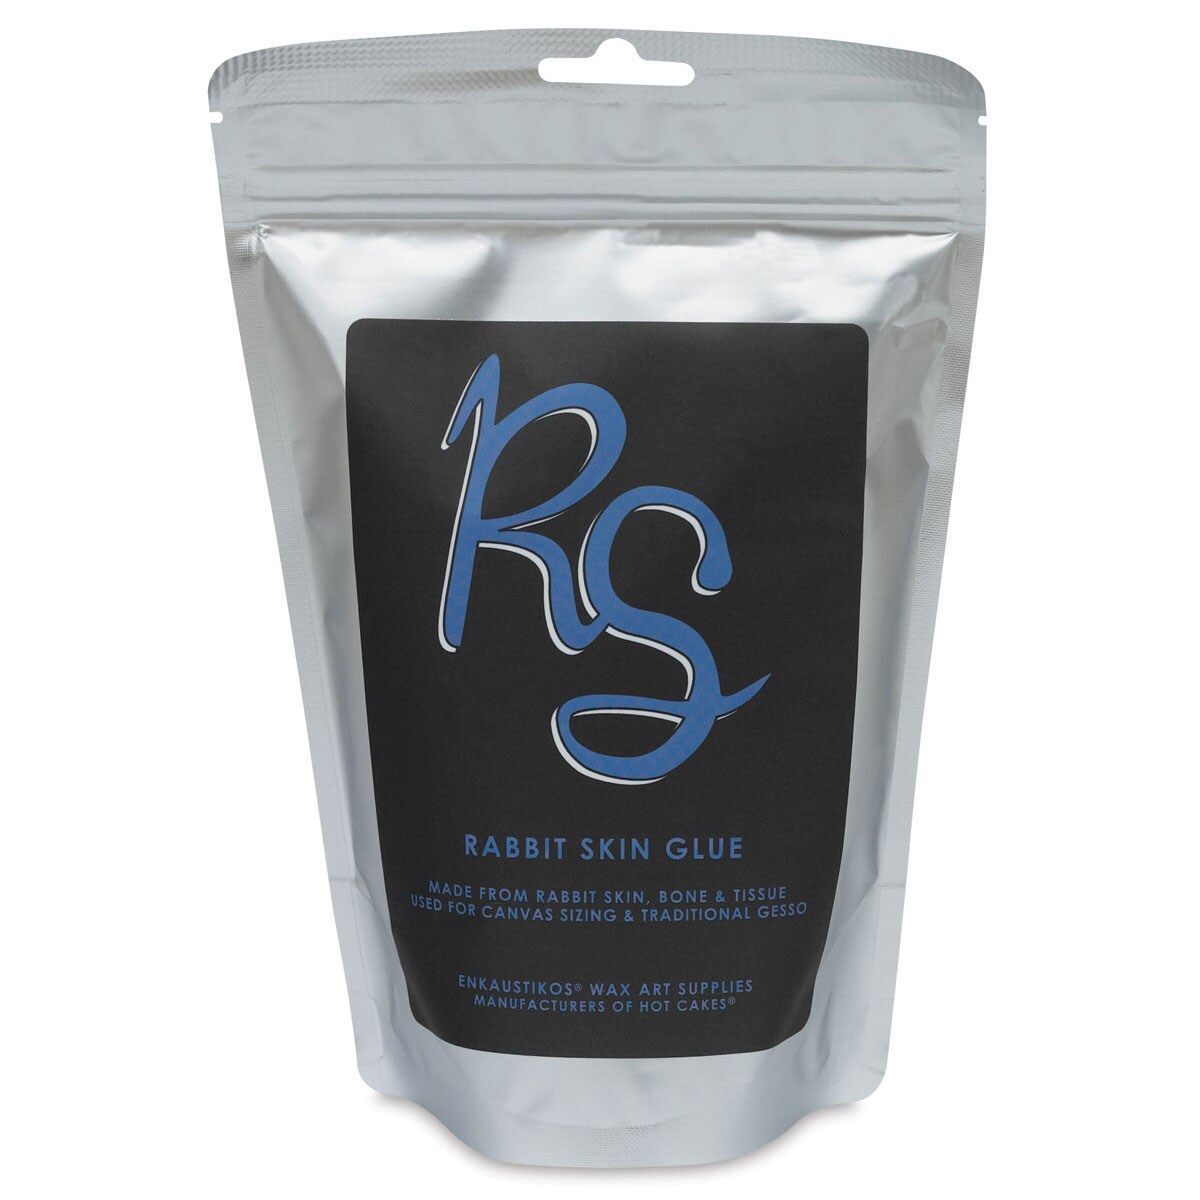 Enkaustikos Rabbit Skin Glue - 8 oz bag